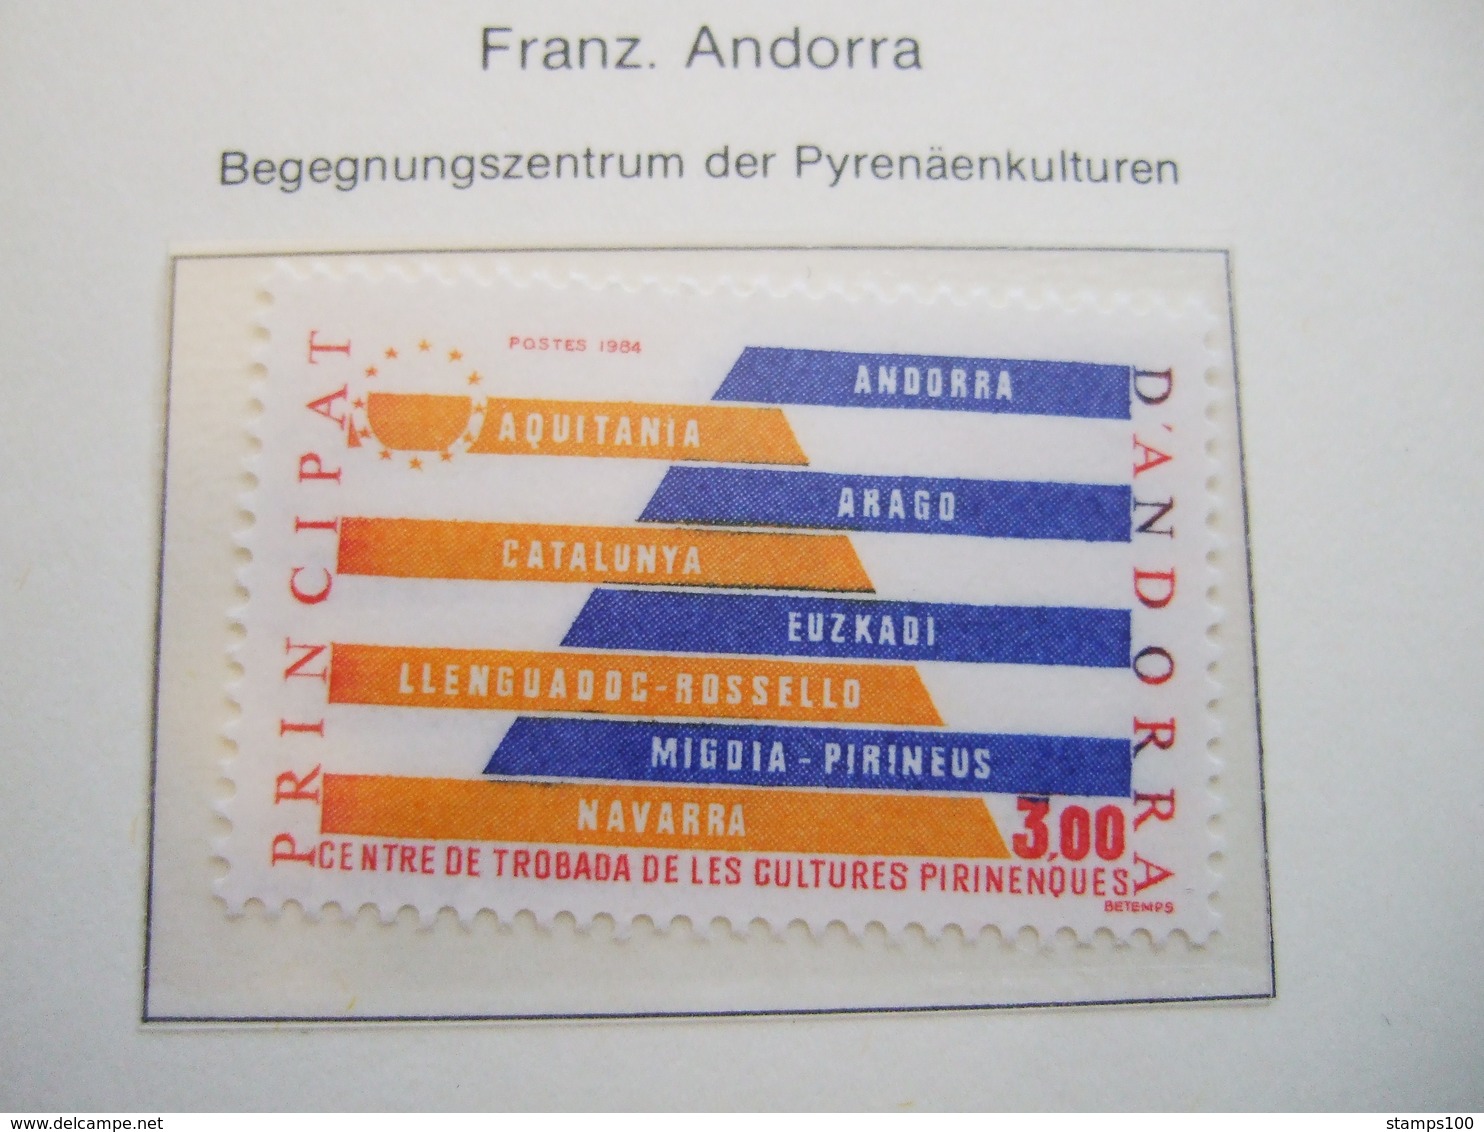 ANDORRE FRANCE    1984  PYRENEES REGION MNH ** (IS11-000) - European Ideas